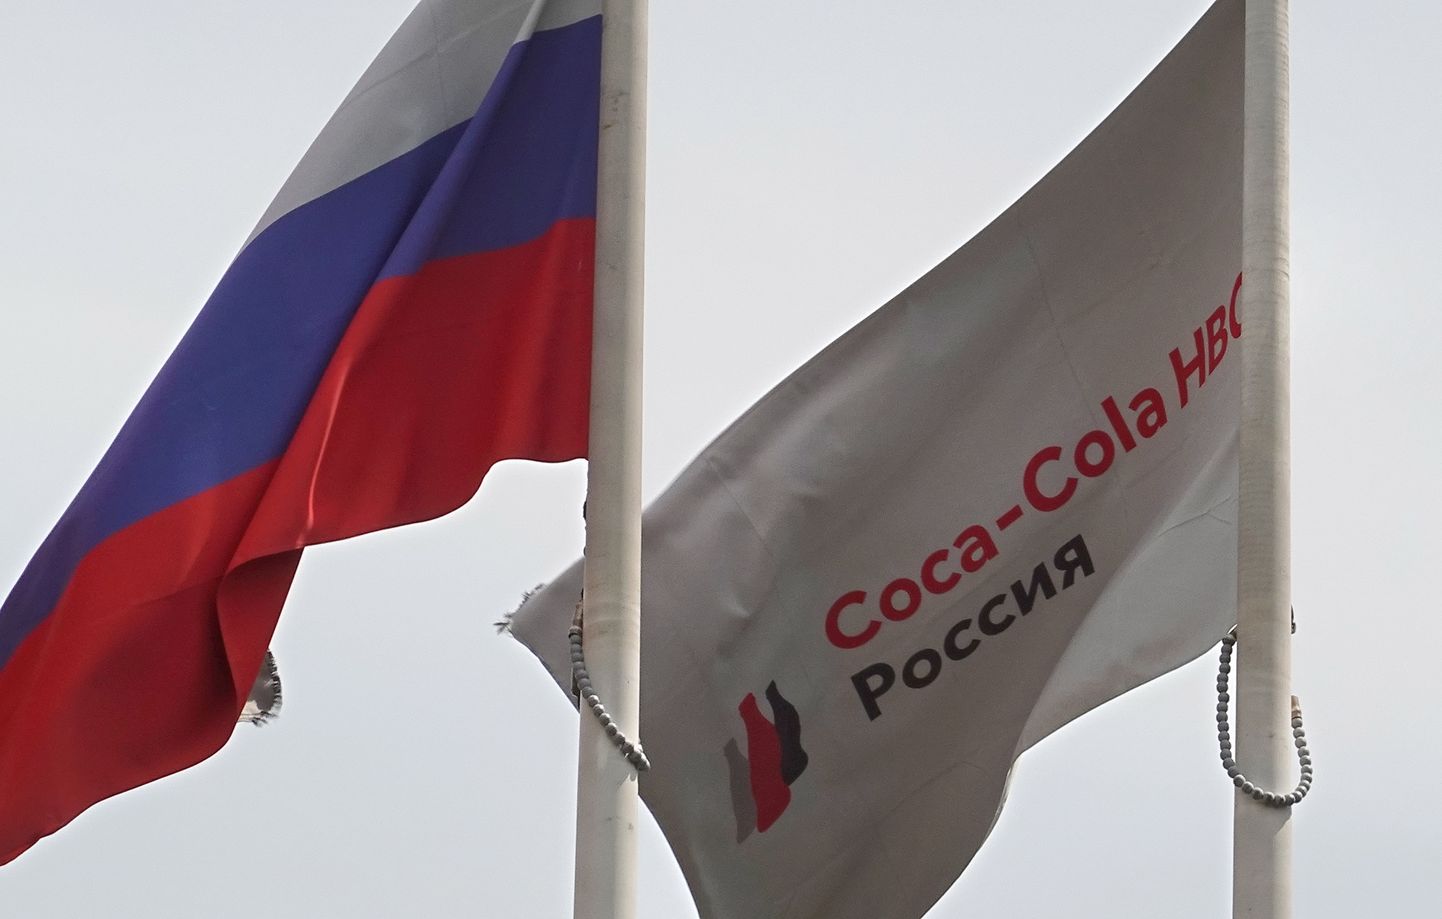 Venemaa ja Coca-Cola lipud Coca-Cola HBC Moskva tehases.